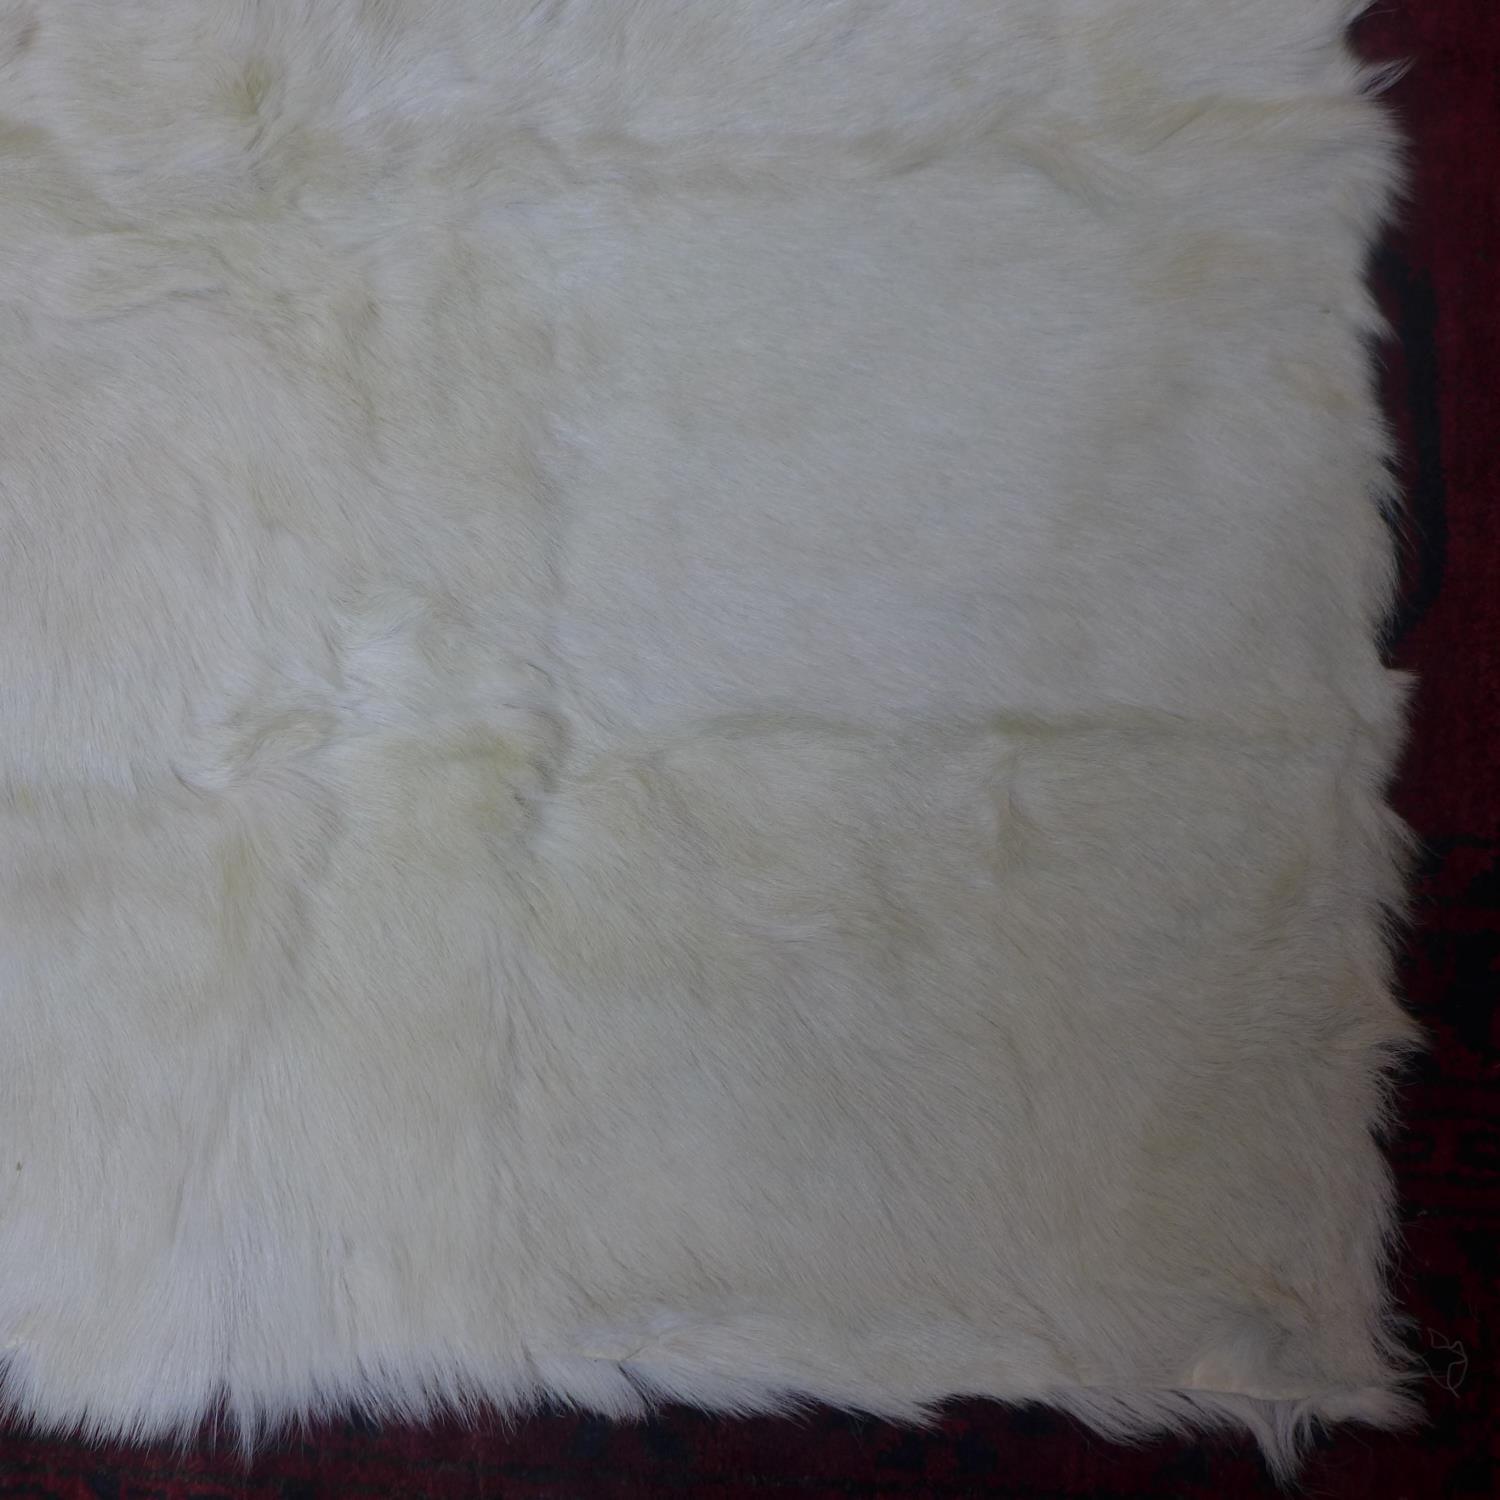 An animal hide rug, 180 x 120cm - Image 2 of 3